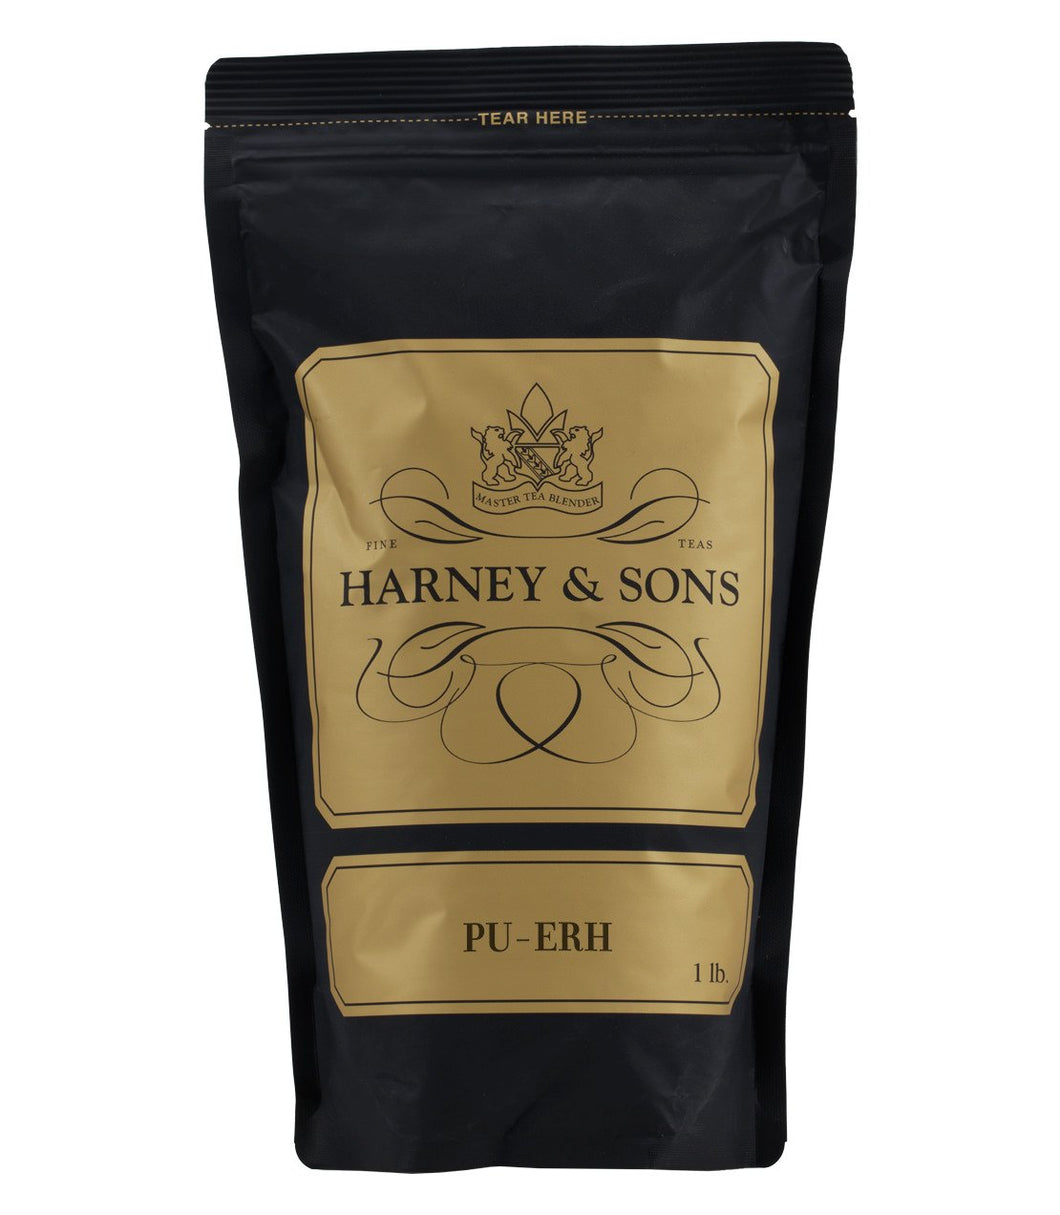 Harney & Sons - Pu erh [Loose]